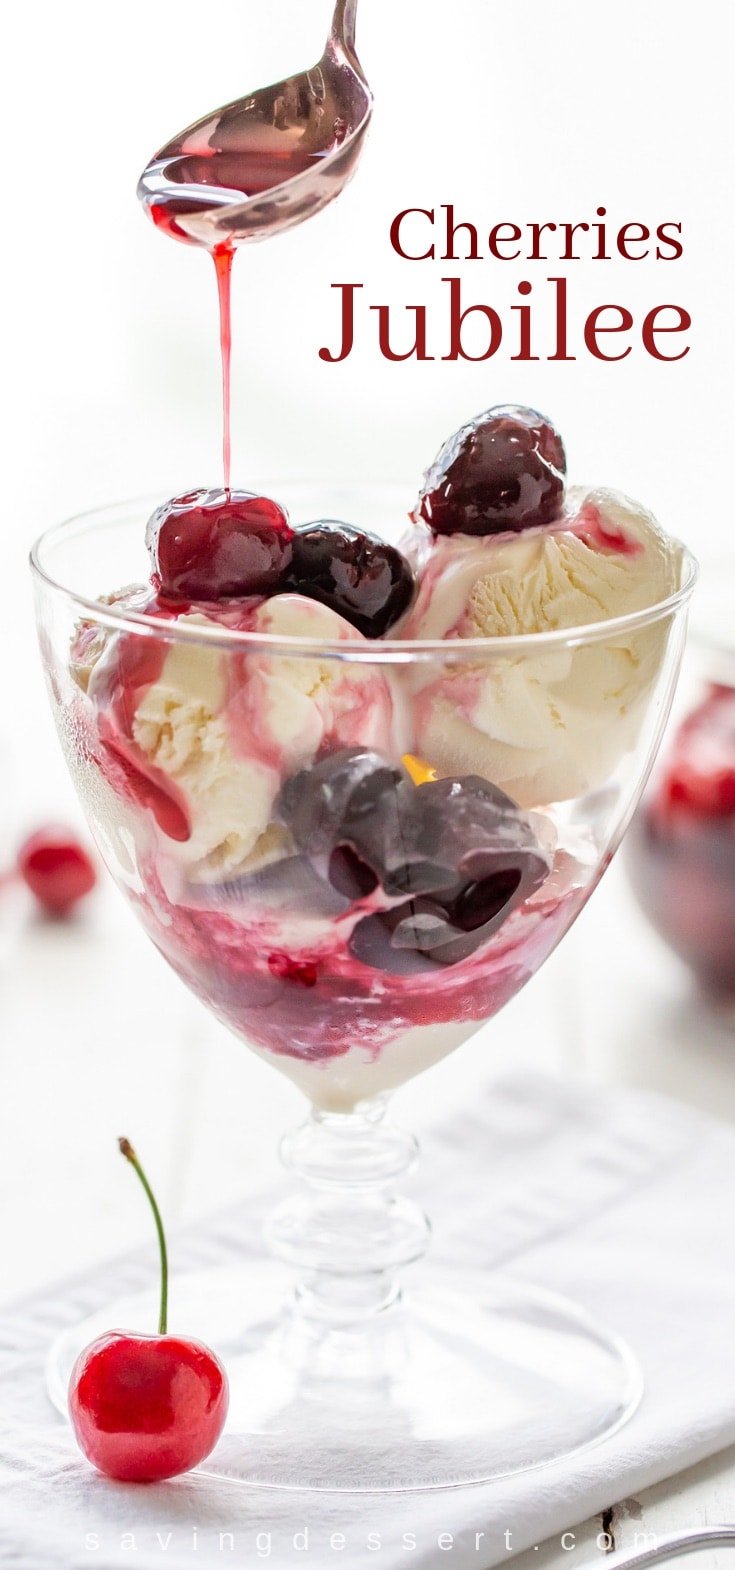 A glass of vanilla ice cream and Cherries Jubilee